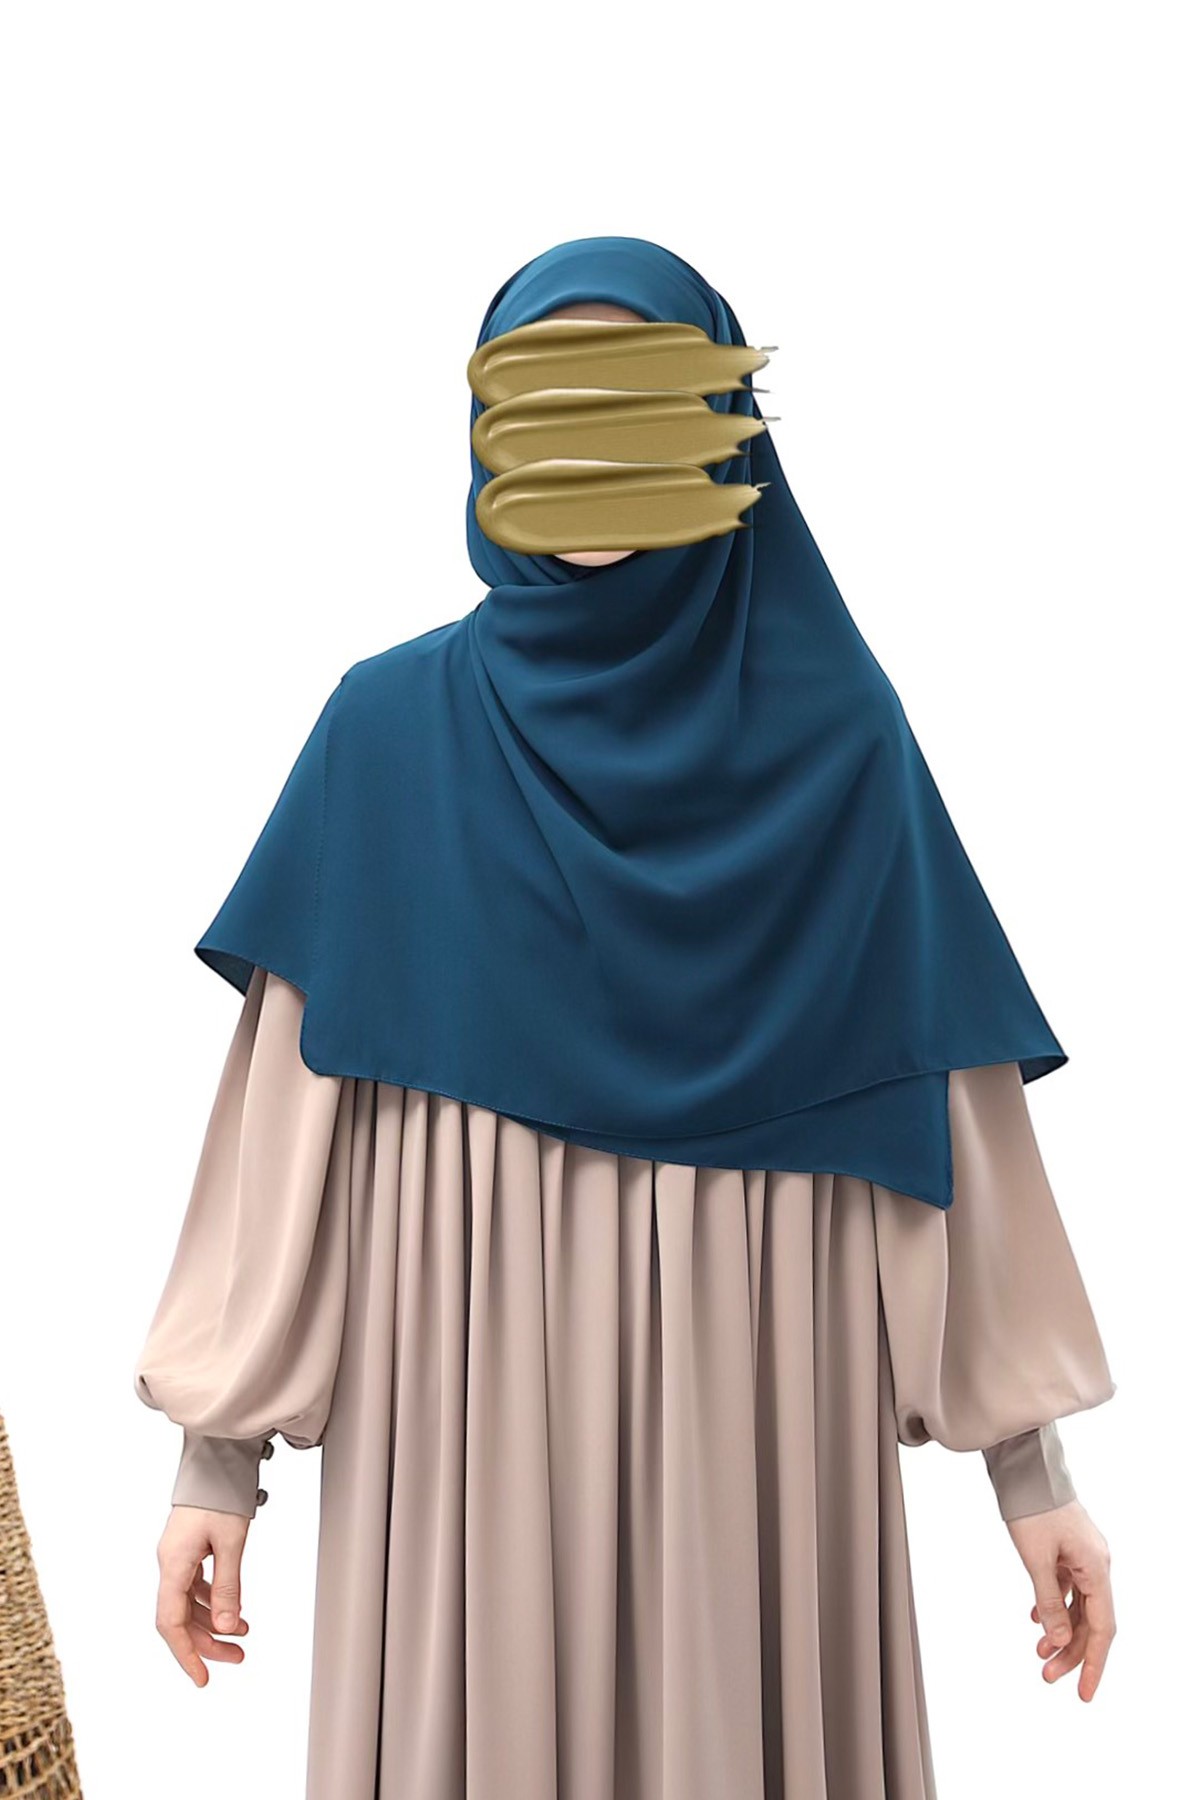 Square Hijab - Teal Blue